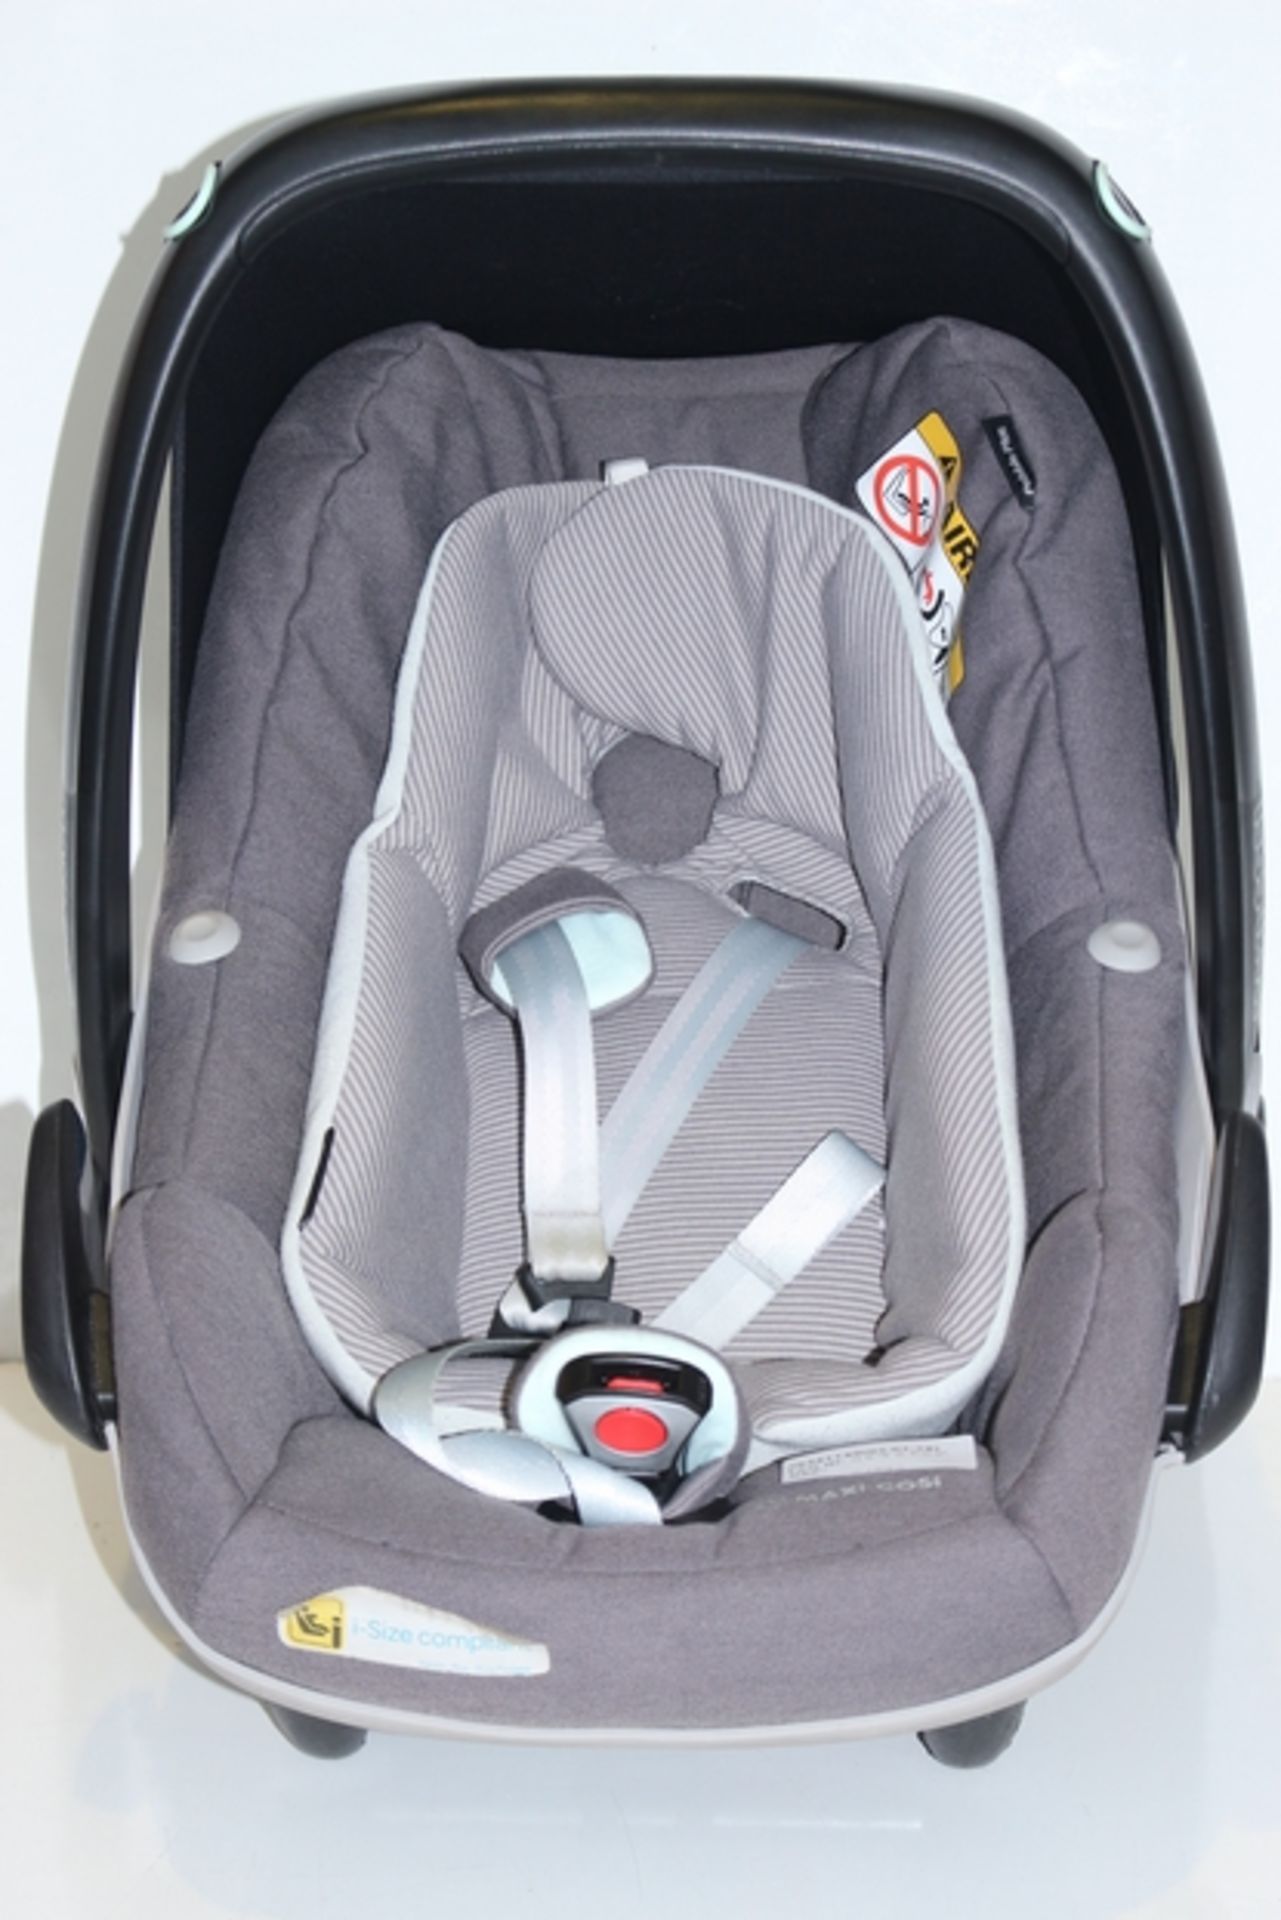 1X MAXI-COSI CHILDREN'S CAR SEAT RRP £200 (JL-9341149) (03/01/18) (4696658)